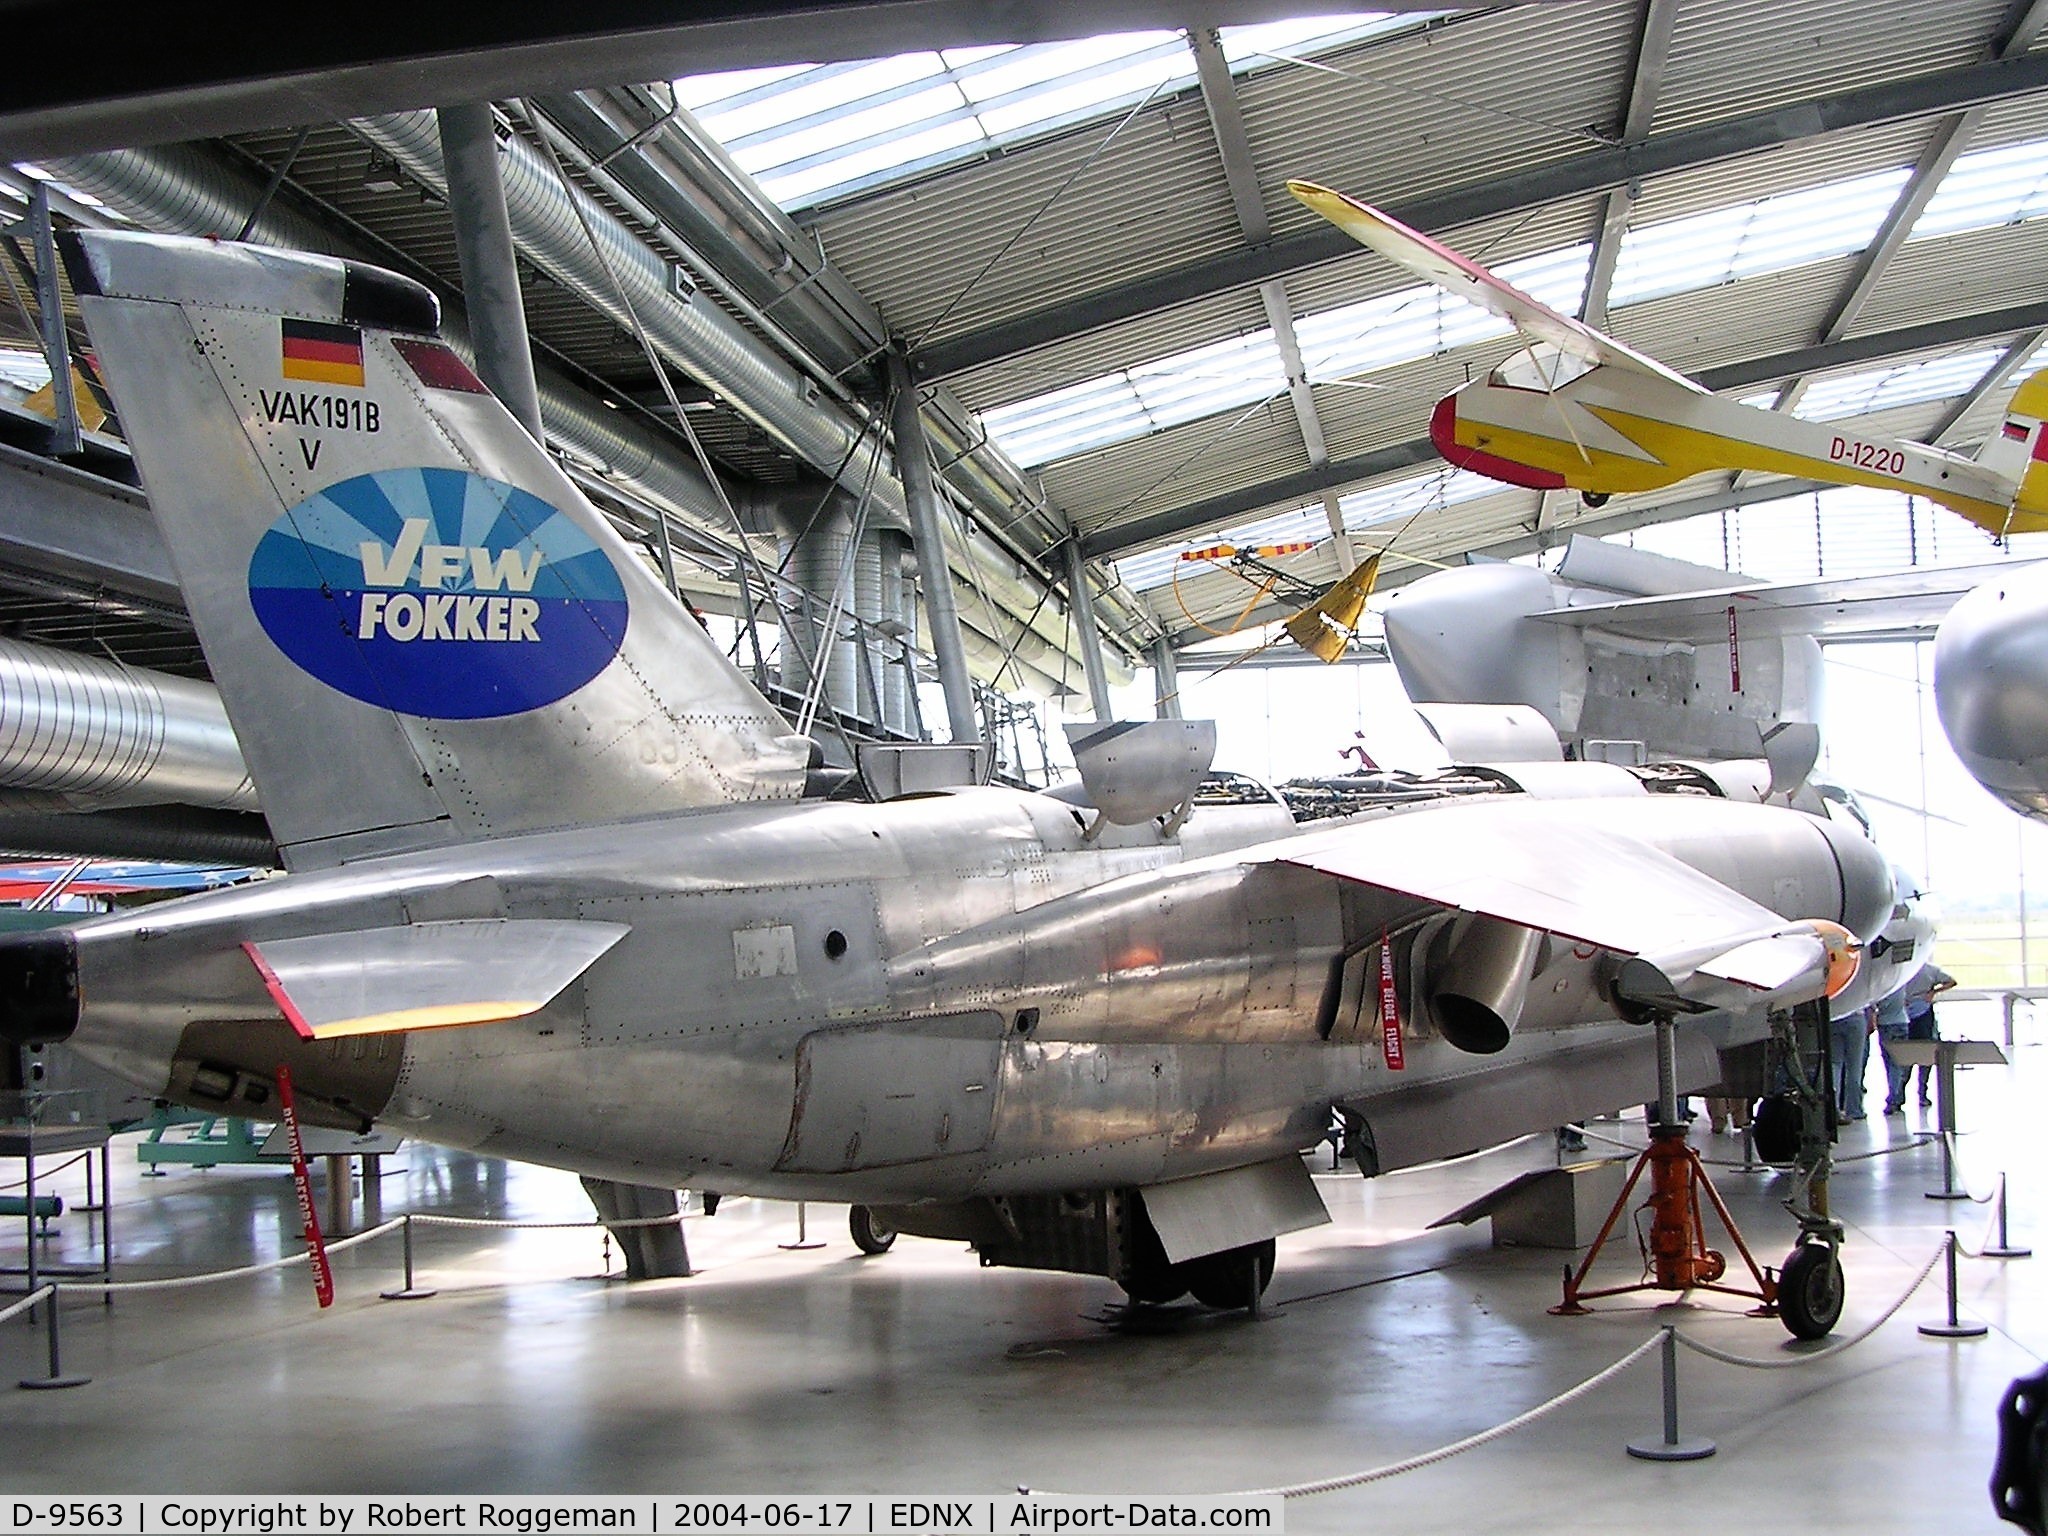 D-9563, VFW-Fokker VAK-191B C/N V1, OBERSCHLEISSHEIM.DEUTSCHES MUSEUM.